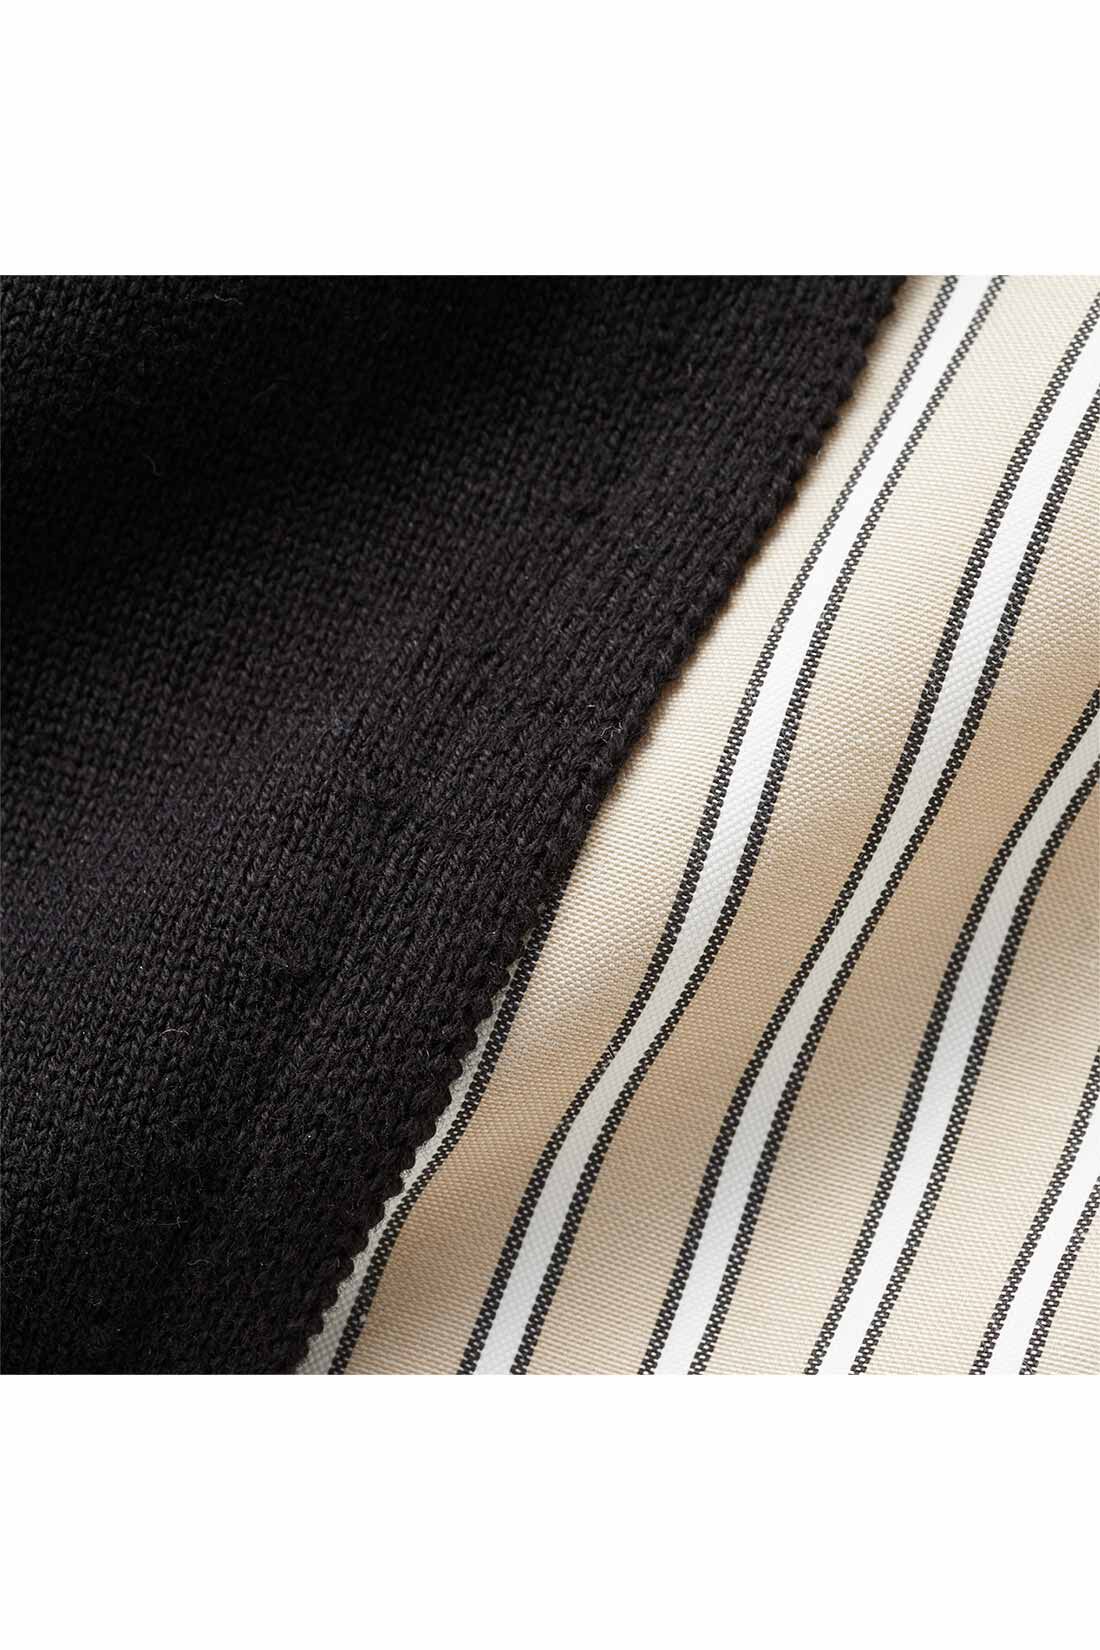 IEDIT|IEDIT[イディット]　異素材切り替えのストライプシャツ ドッキングニットトップス〈ブラウン〉|秋口からさらっと着られるコットンニットとストライプシャツの組み合わせ。